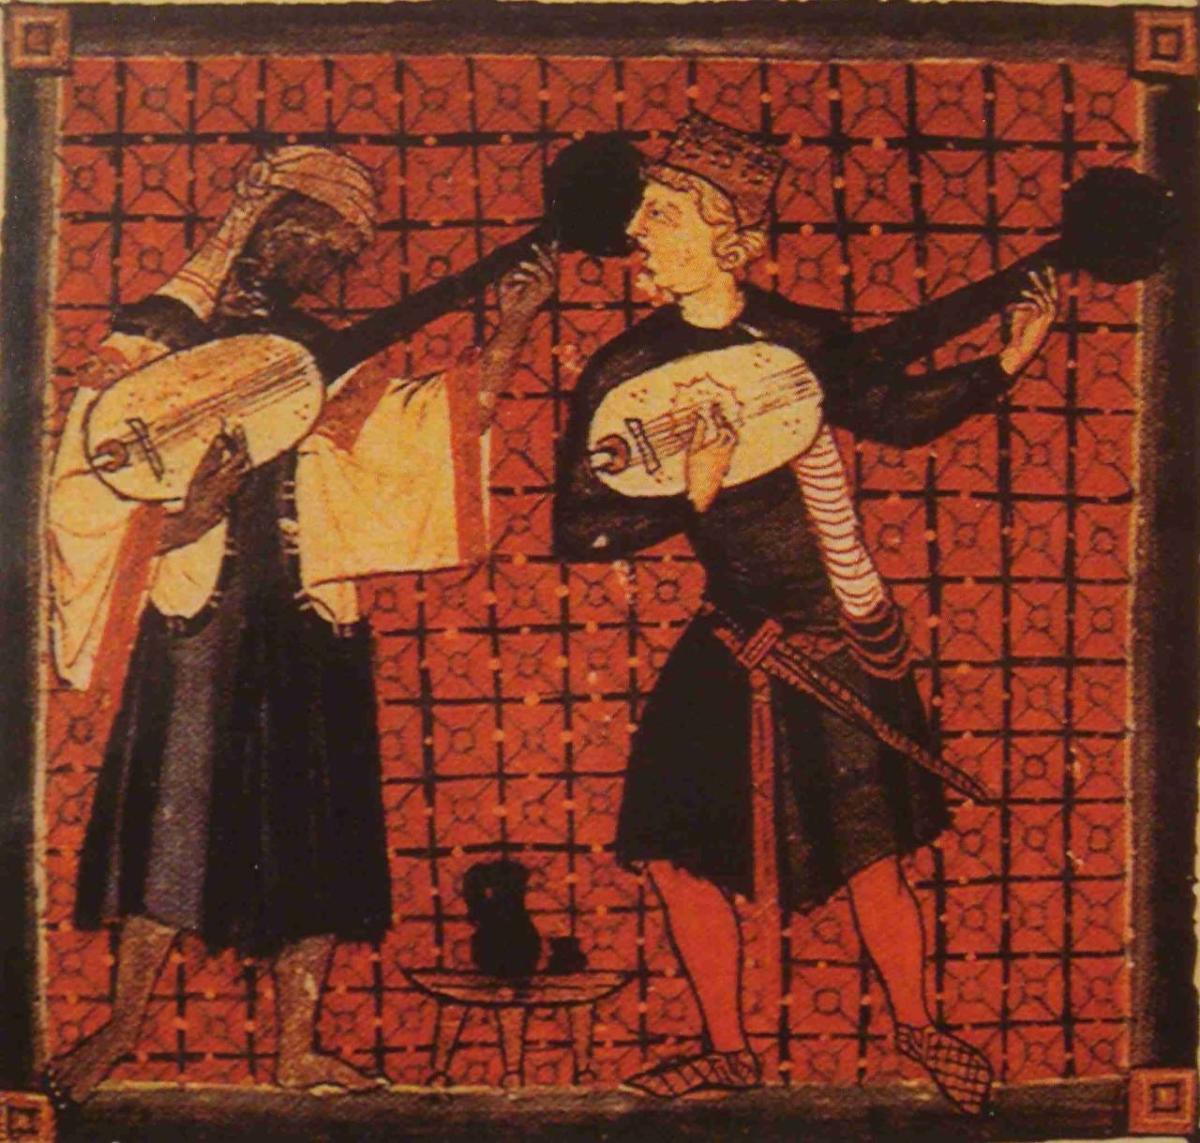 Illustration from the Cantigas de Santa Maria, c.1250